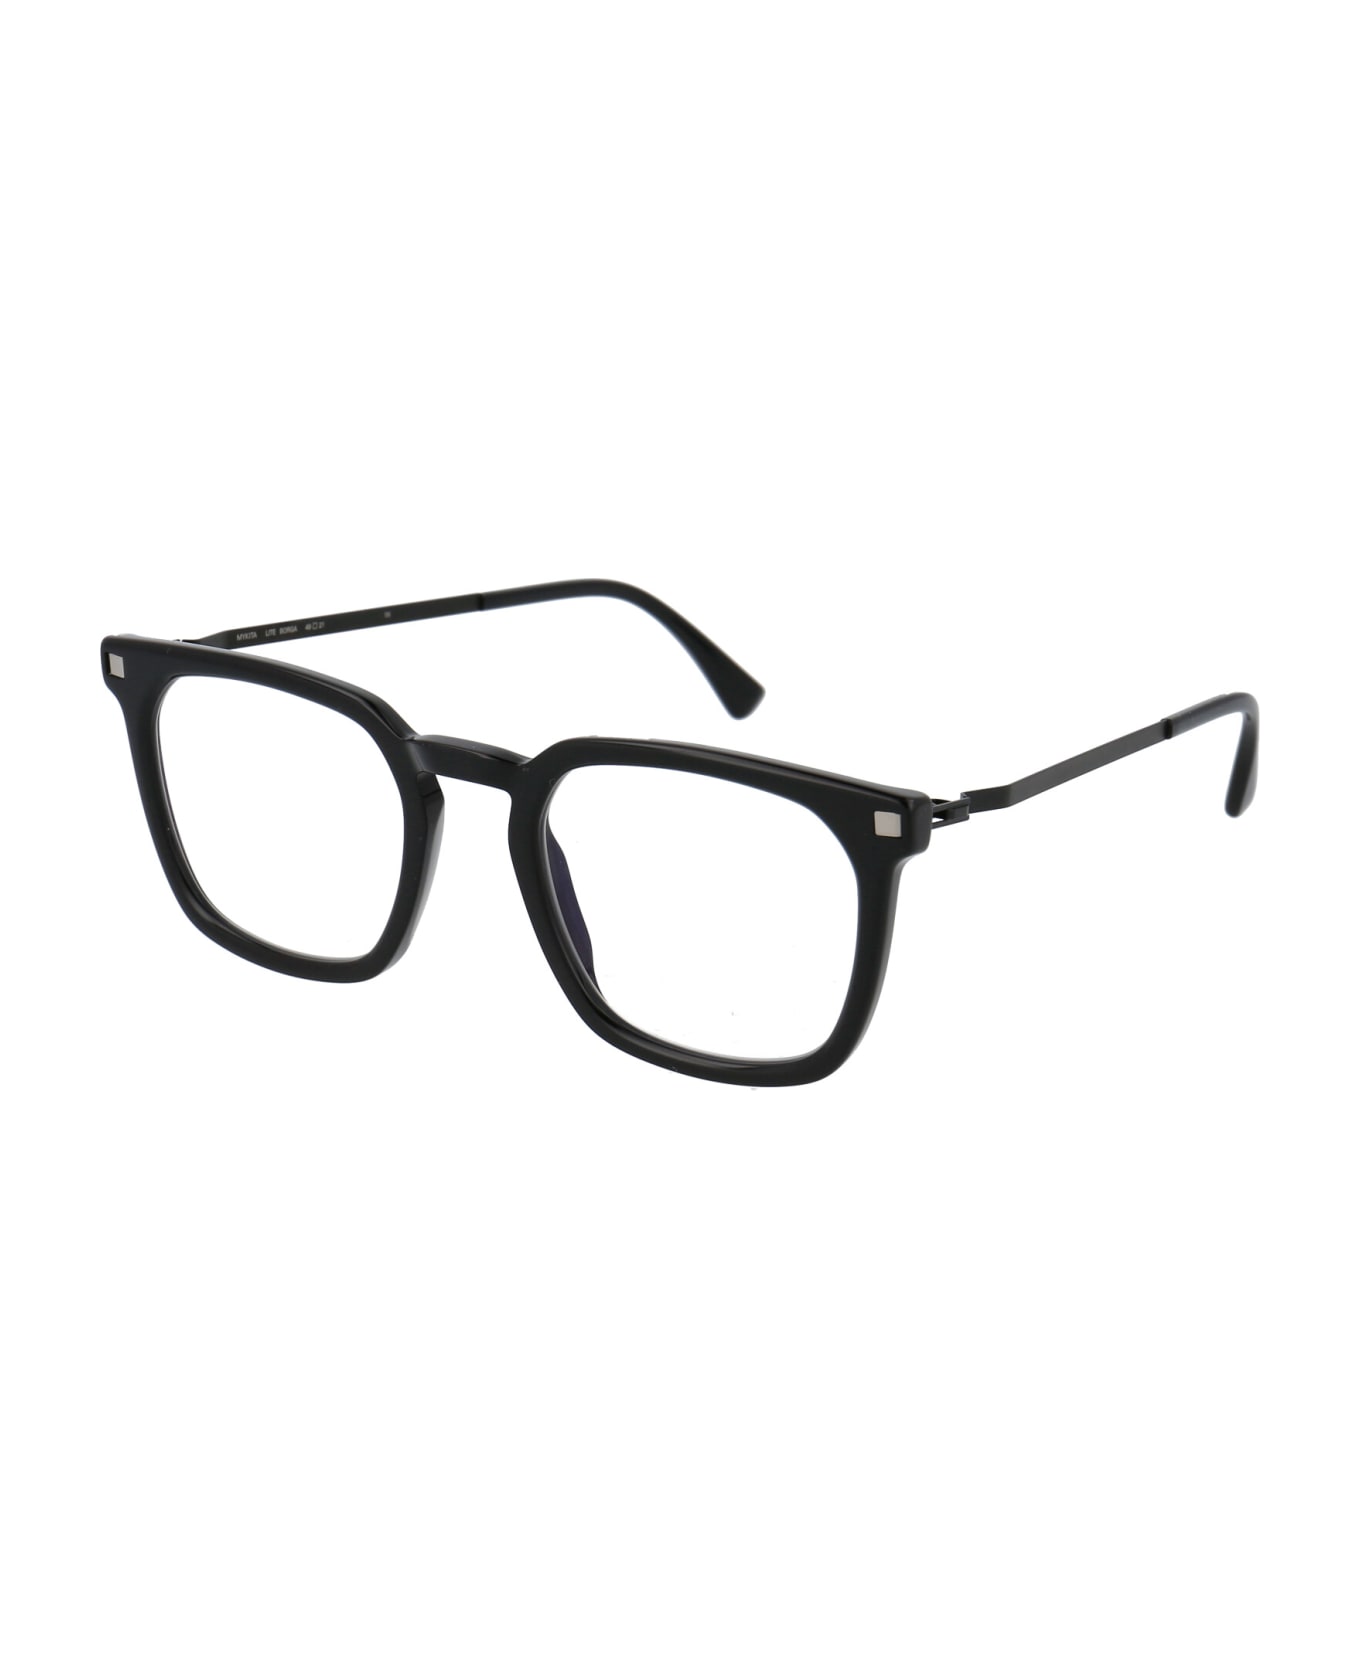 Mykita Borga Glasses - 877 C95 Black/Silver/Black Clear